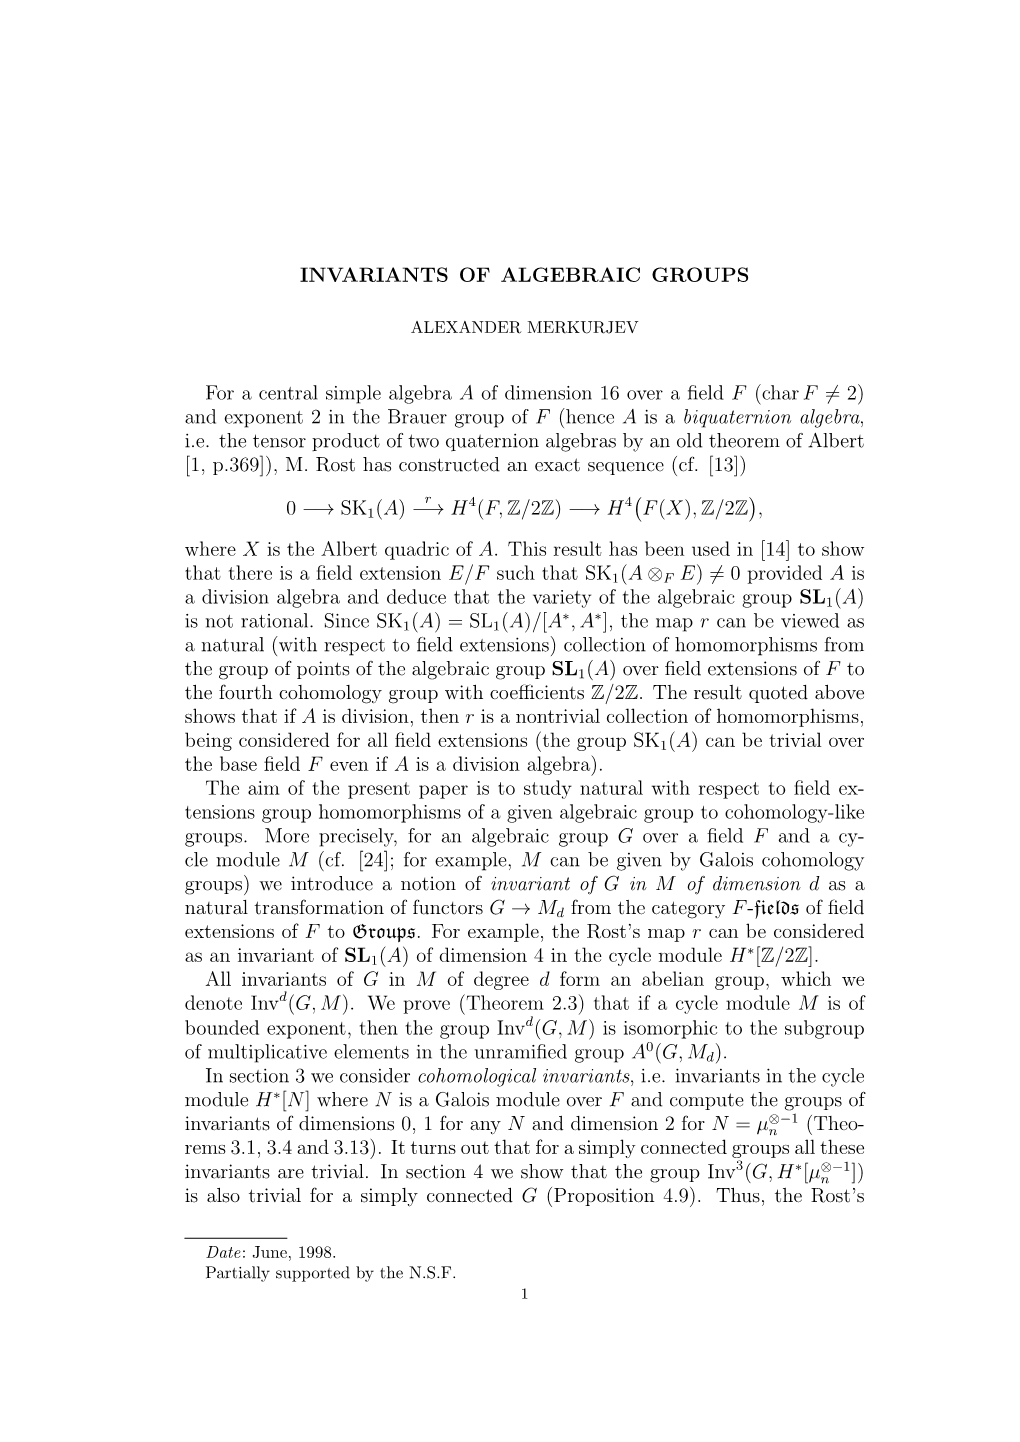 Invariants of Algebraic Groups